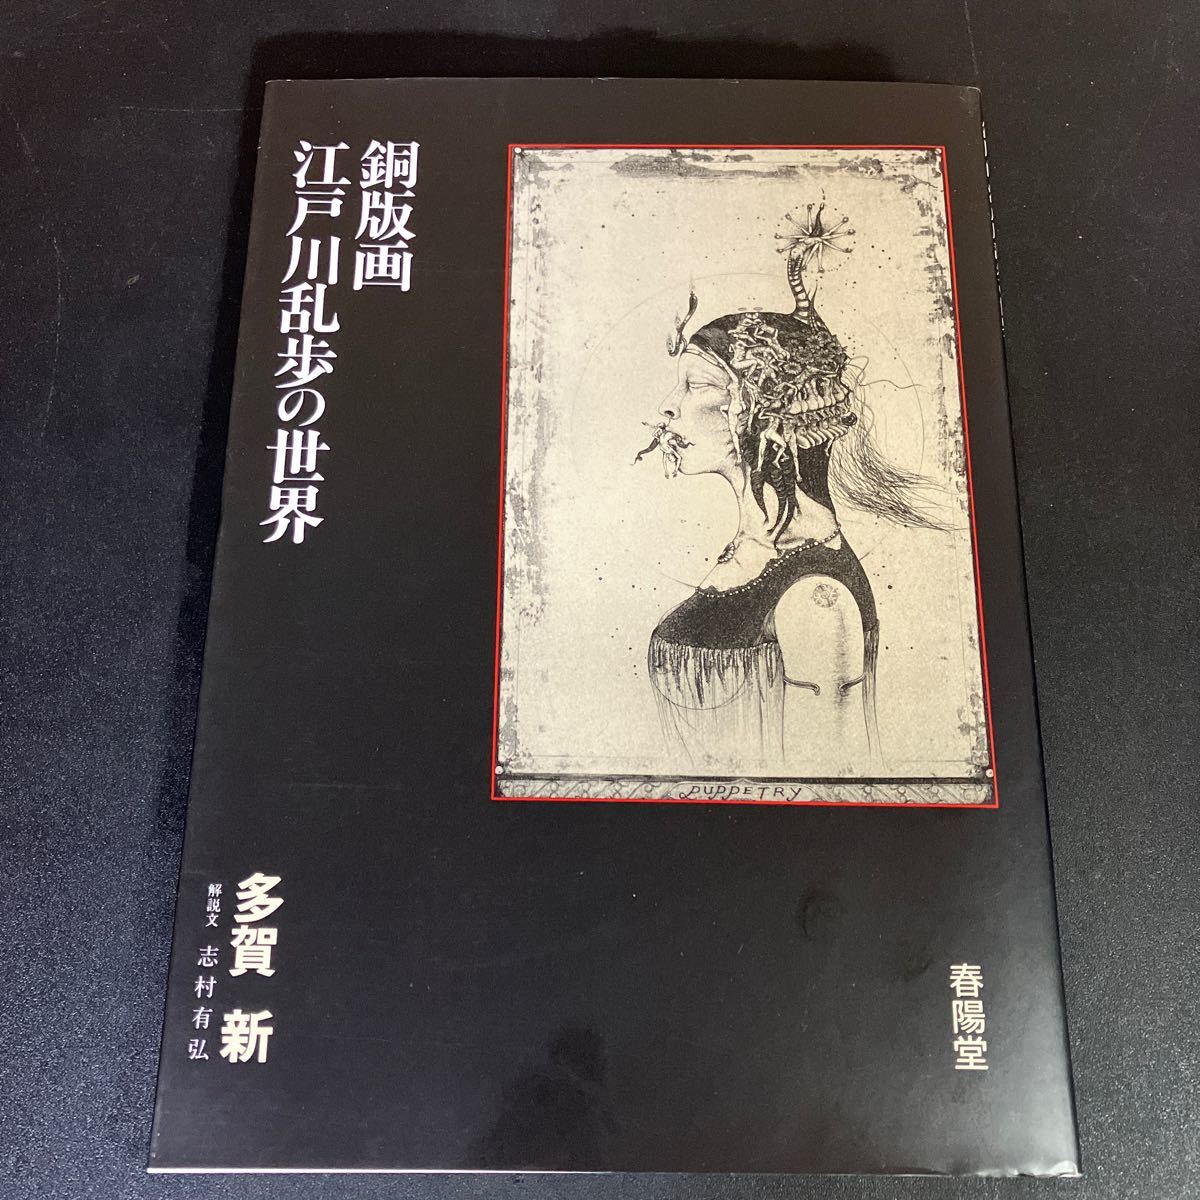 23-11-20 Copperplate: The World of Edogawa Ranpo by Arata Taga/Shunyodo, painting, Art book, Collection of works, Art book